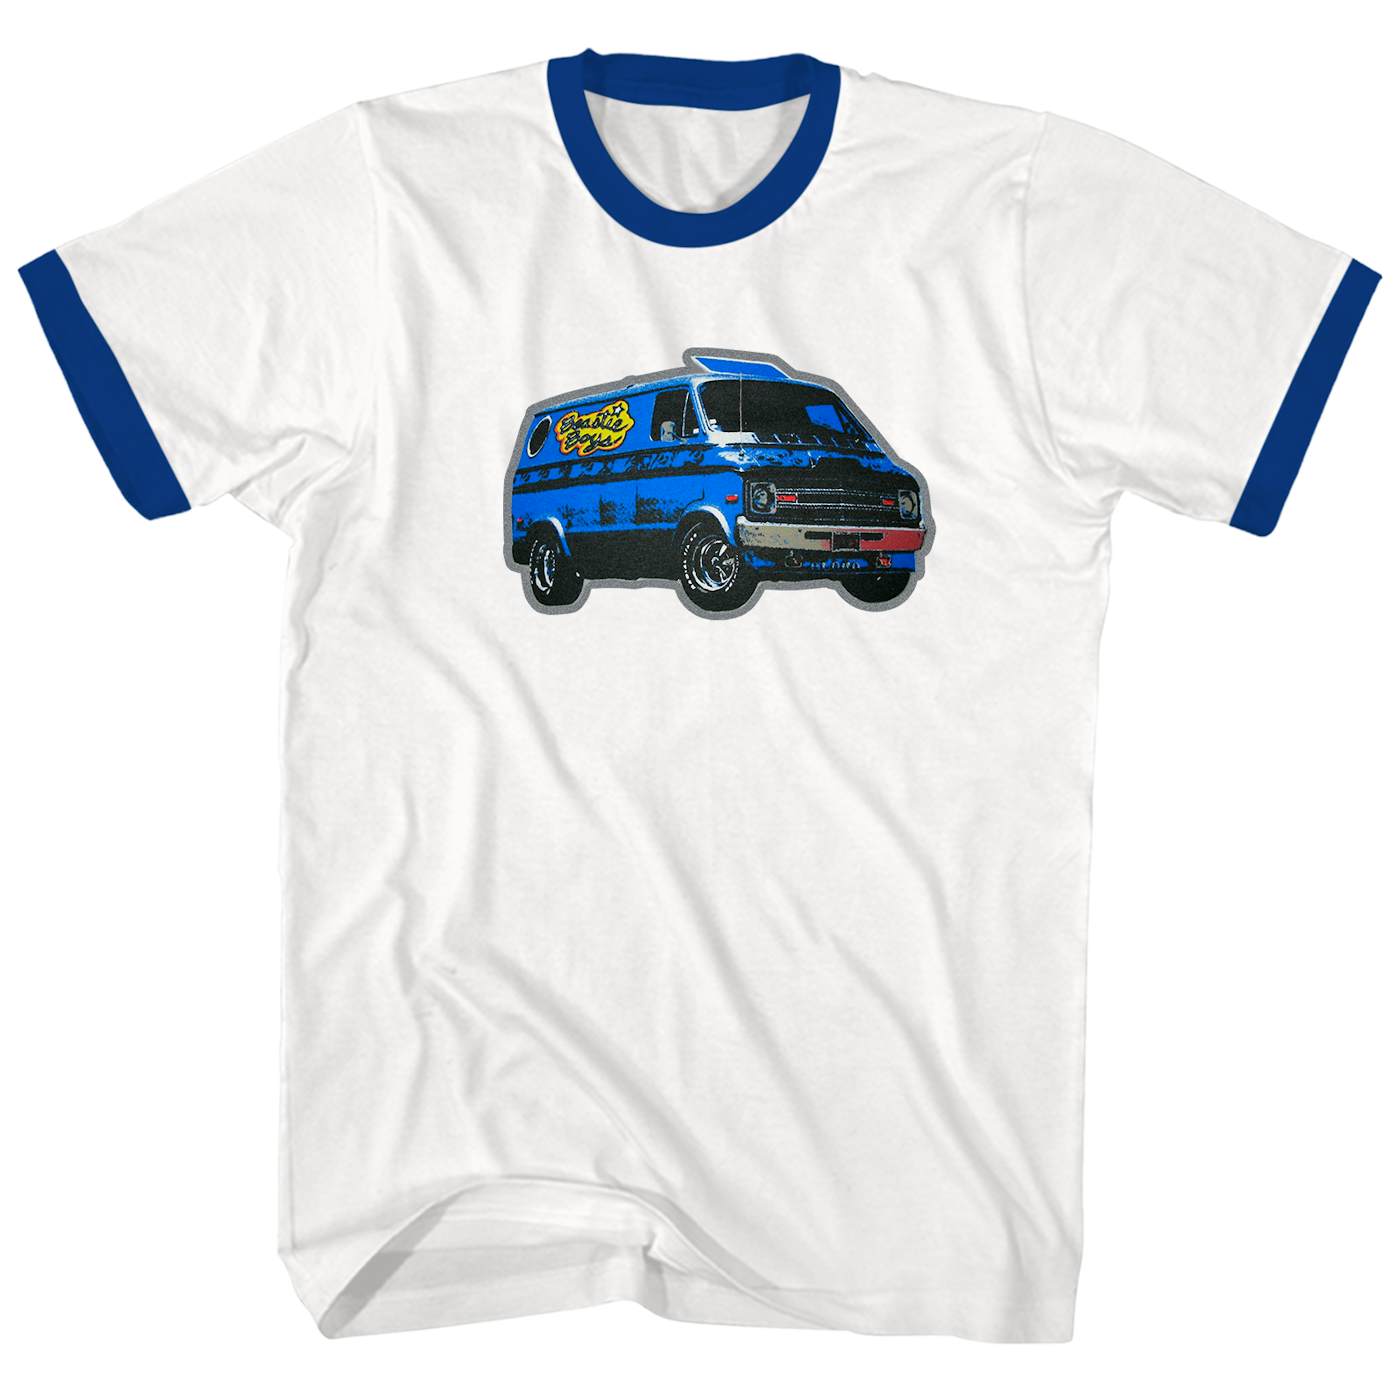 Beastie Boys T-Shirt | Aloha Mr. Hand Blue Van Beastie Boys Shirt